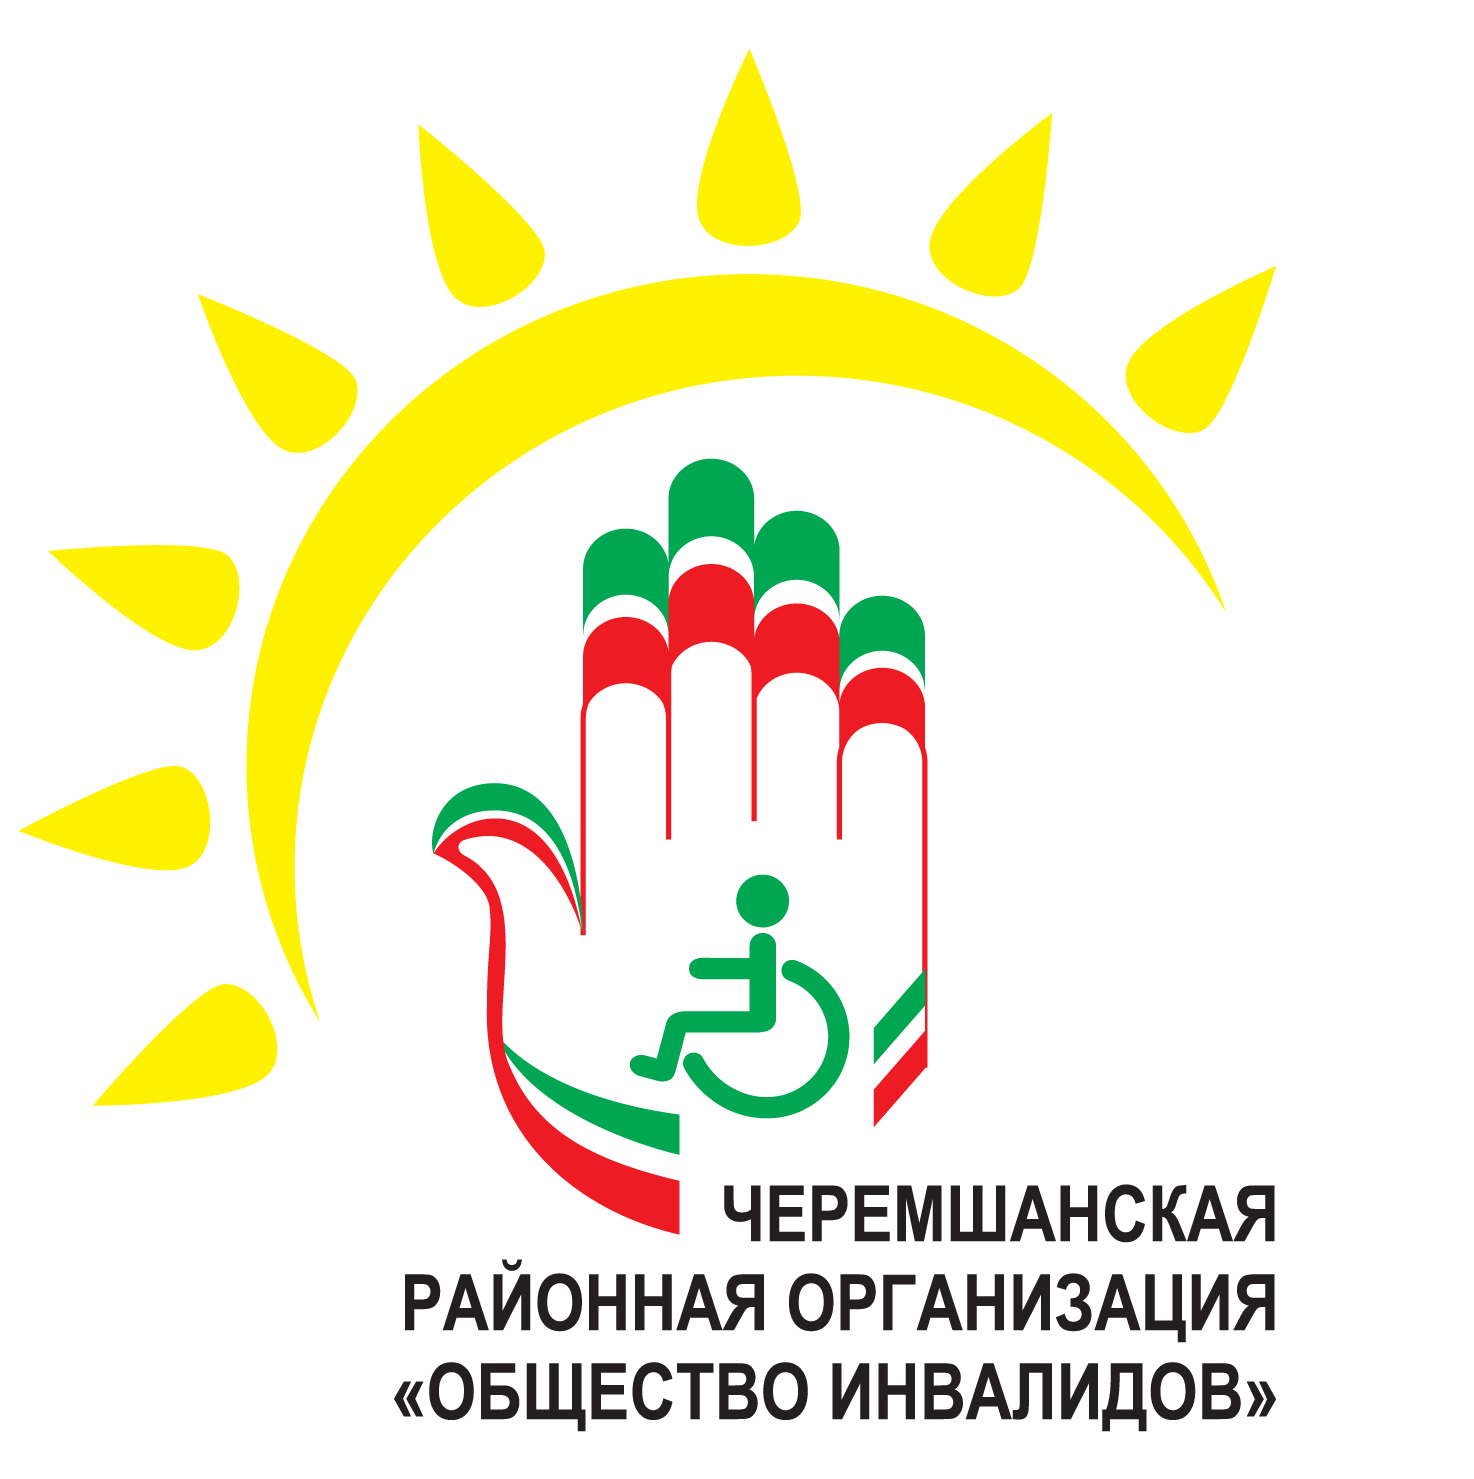 ВОИ логотип. Общество инвалидов логотип. Всероссийское общество инвалидов. Всероссийское общество инвалидов лого.